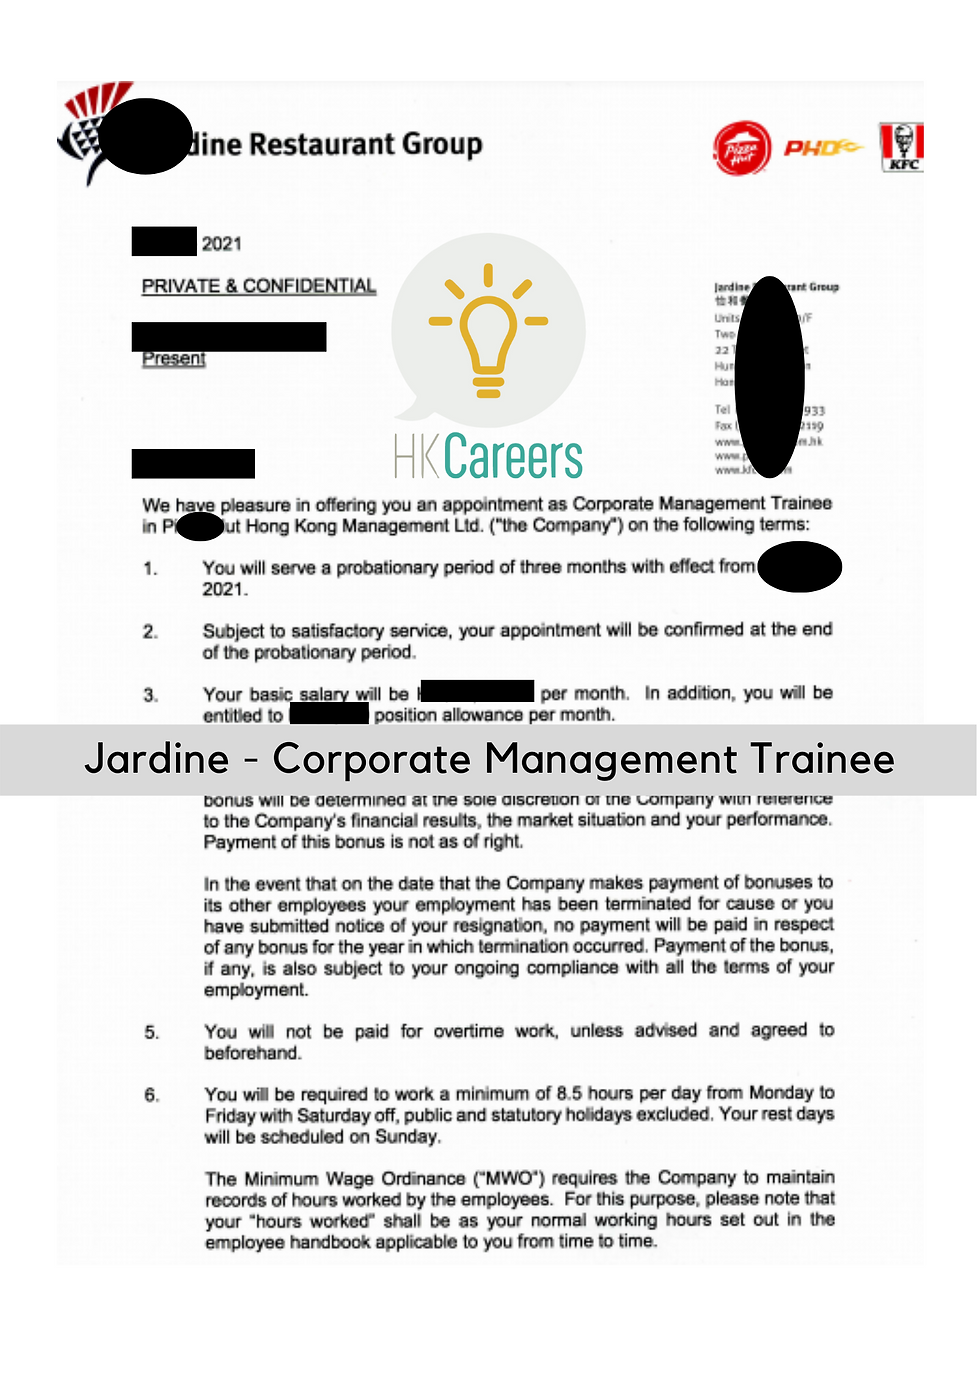 Jardine - Corporate Management Trainee (2021) -1